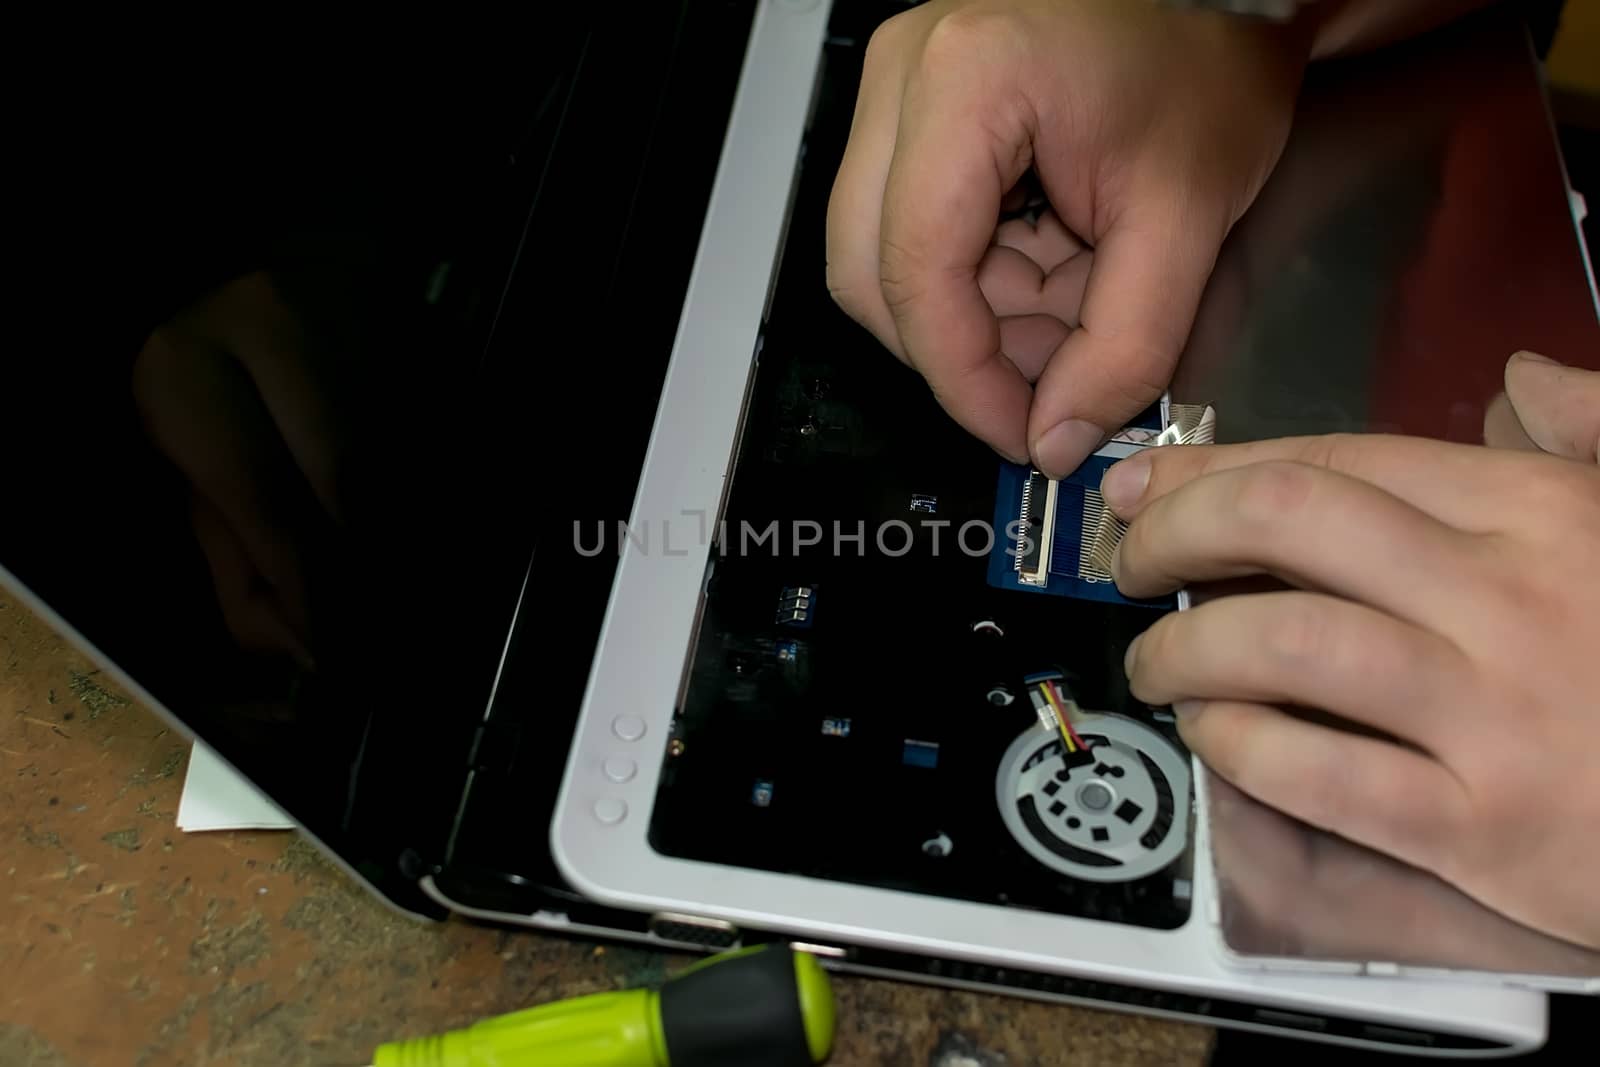 the hands of a man repairing a laptop by jk3030